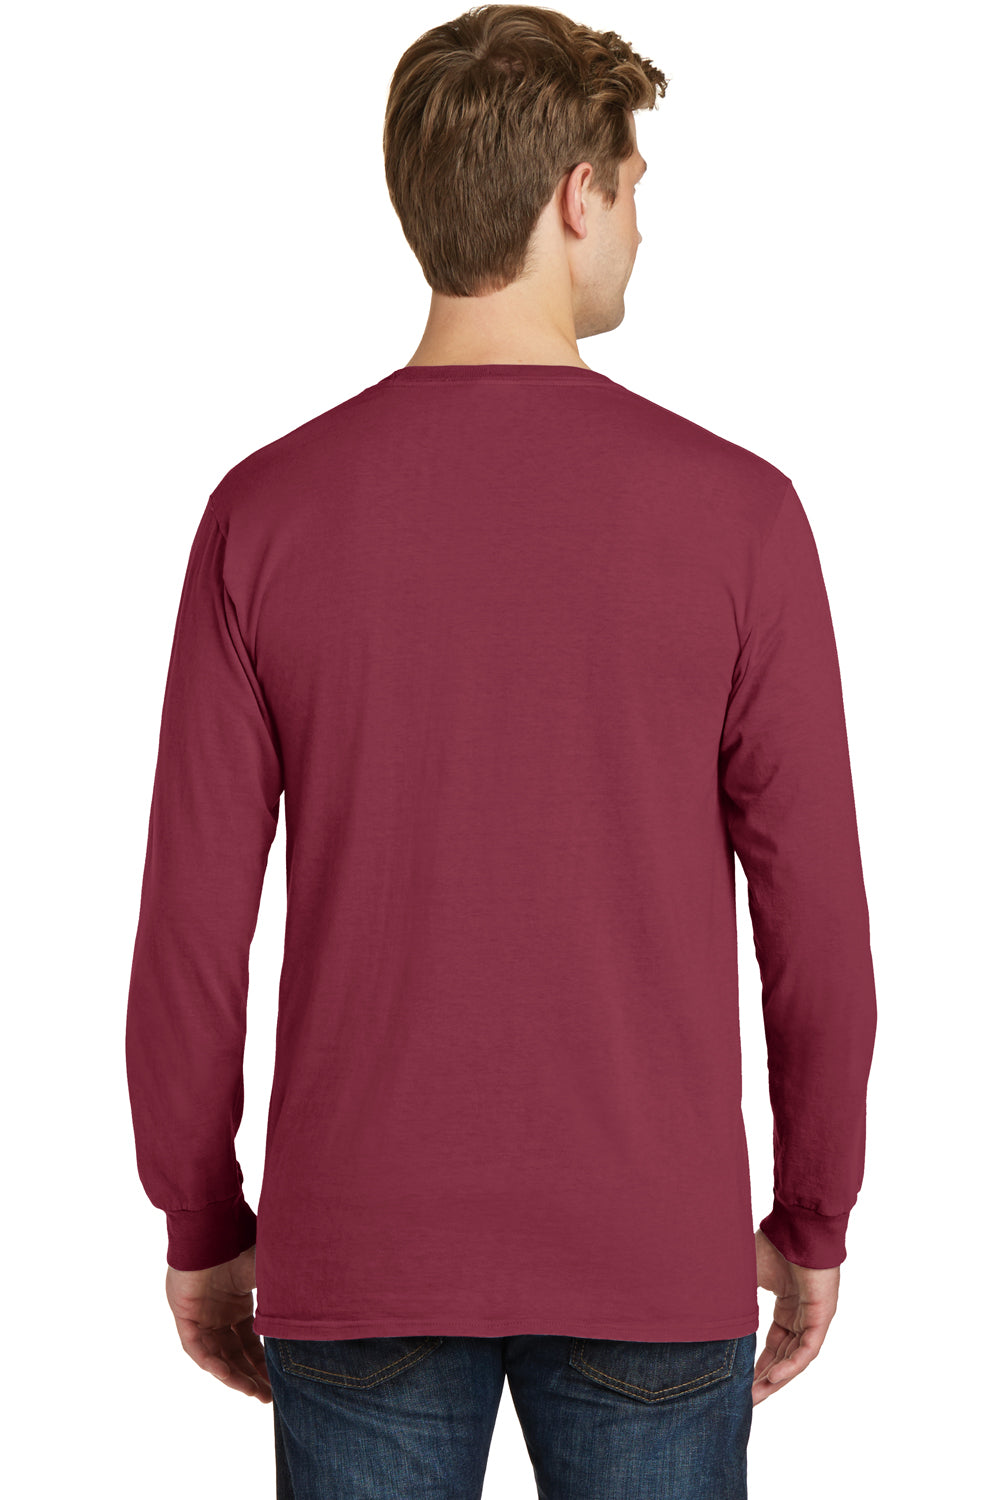 Port & Company PC099LSP Mens Beach Wash Long Sleeve Crewneck T-Shirt w/ Pocket Merlot Red Back